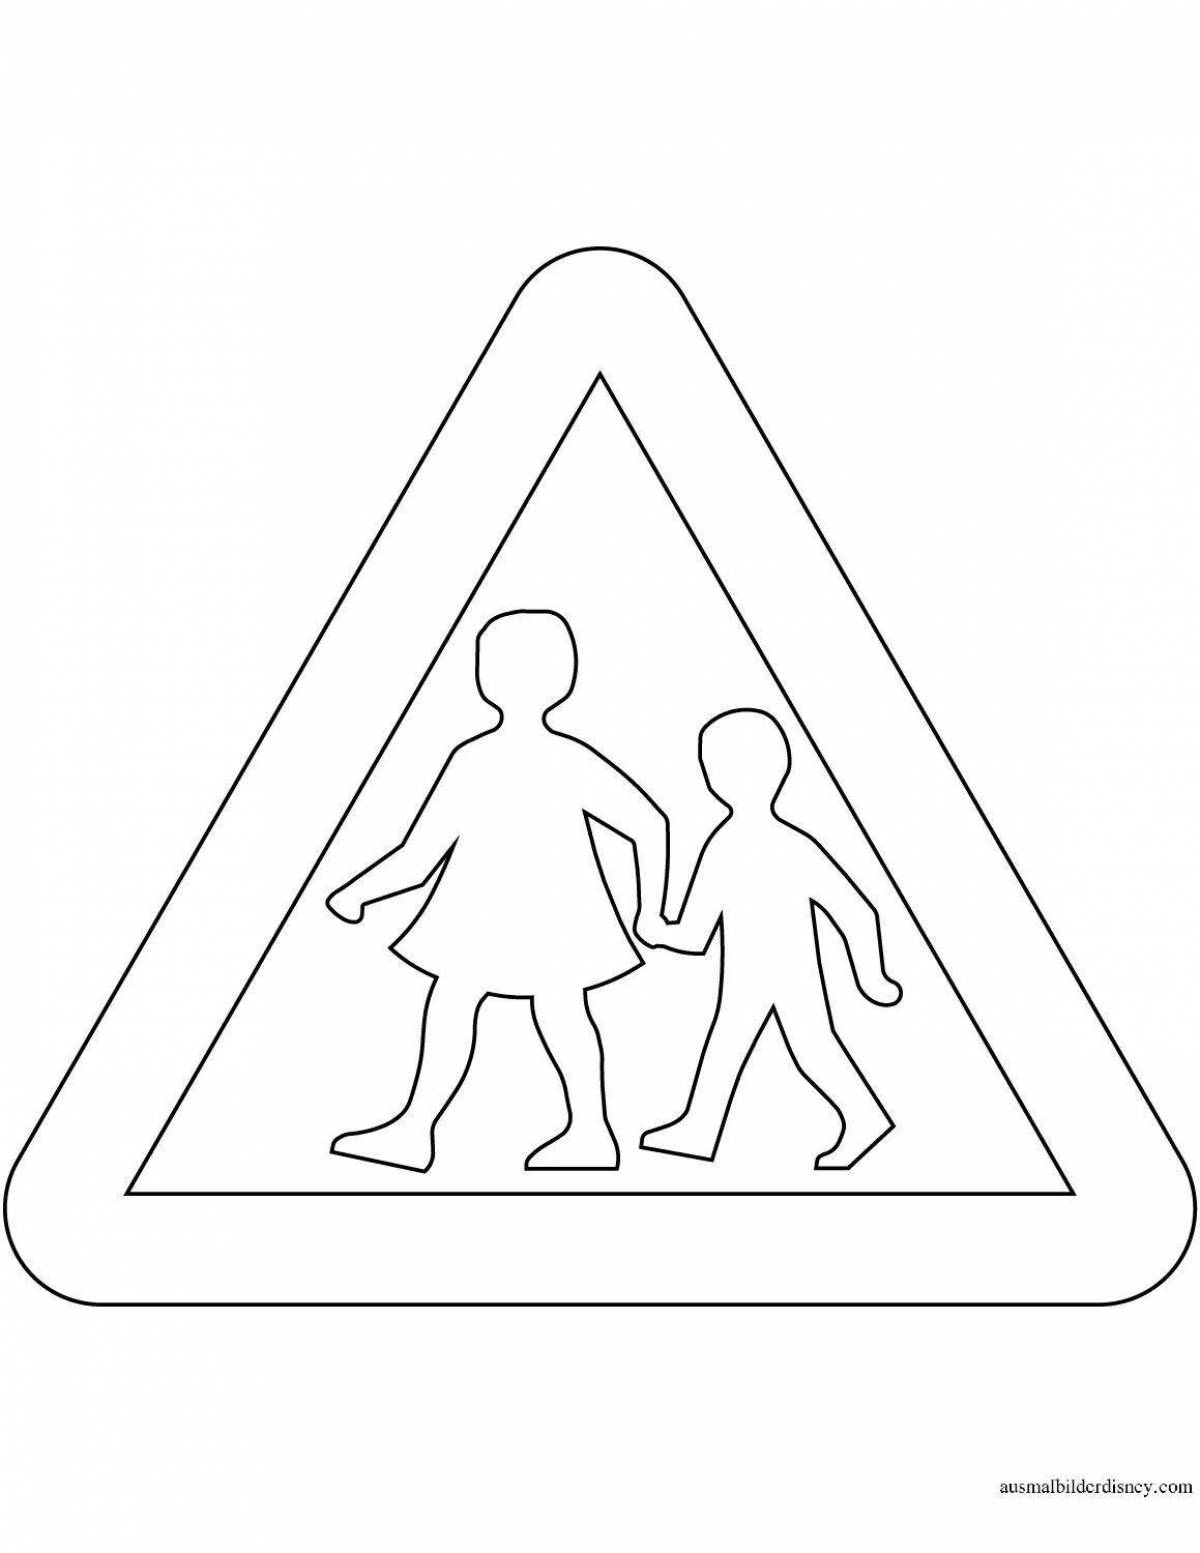 Sign caution children road template #9